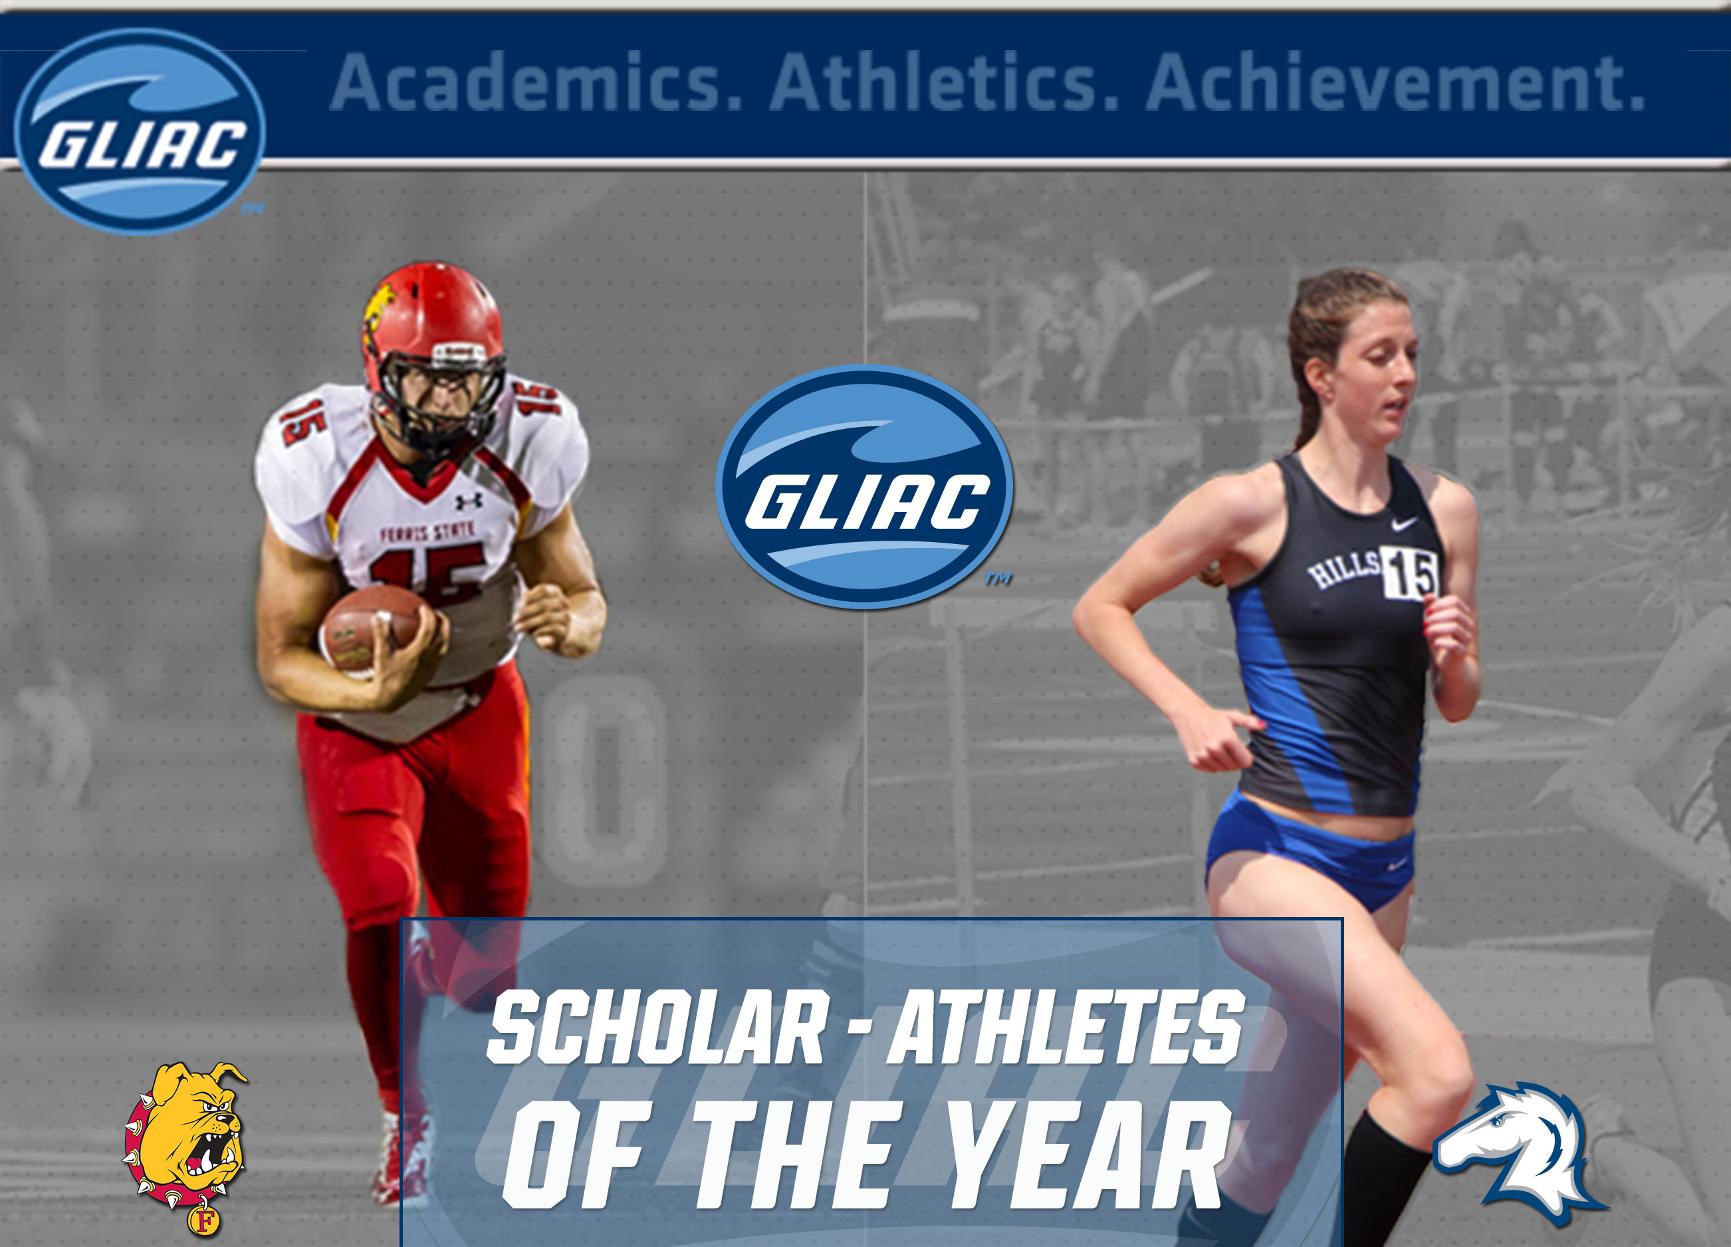 GLIAC Sweeps D2 CCA 2015-16 Scholar-Athletes of the Year